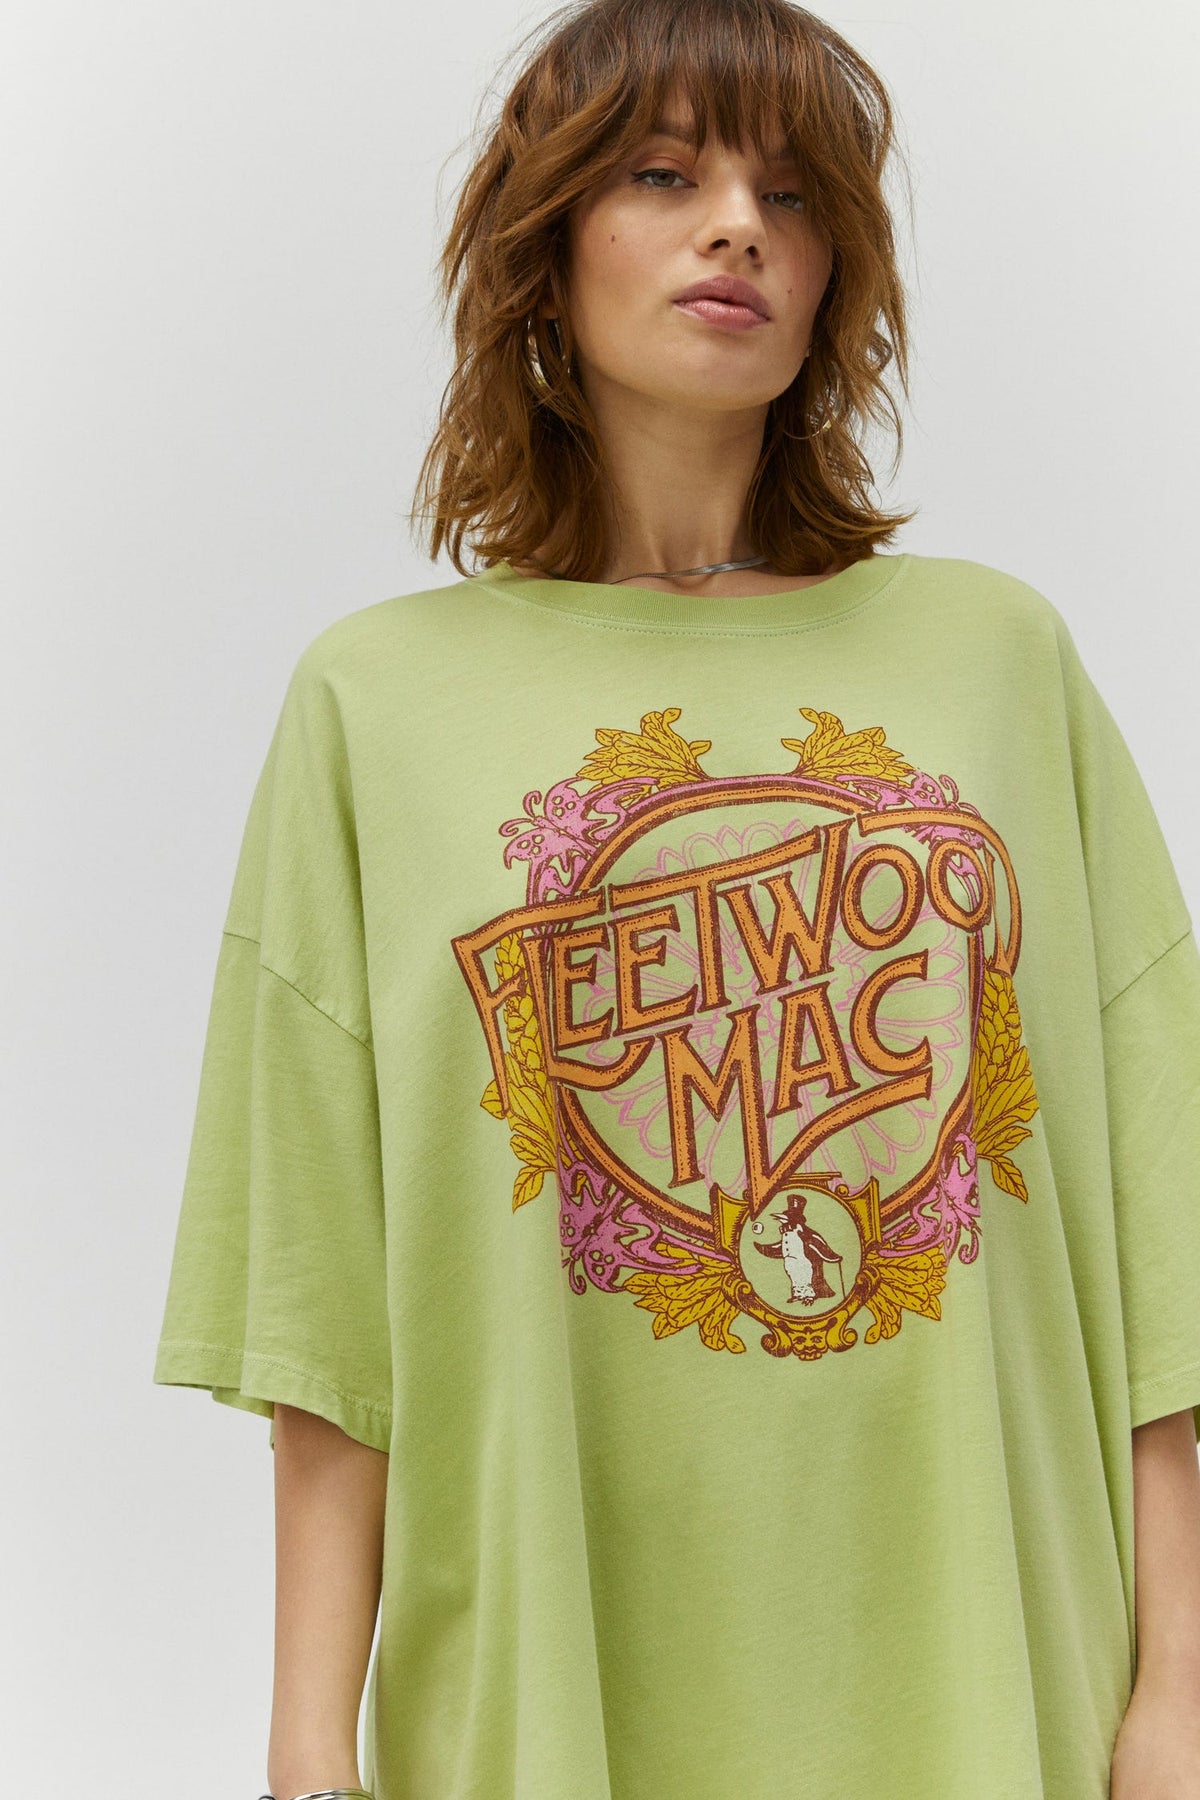 Daydreamer Fleetwood Mac Flower Crest One Size Band Tee